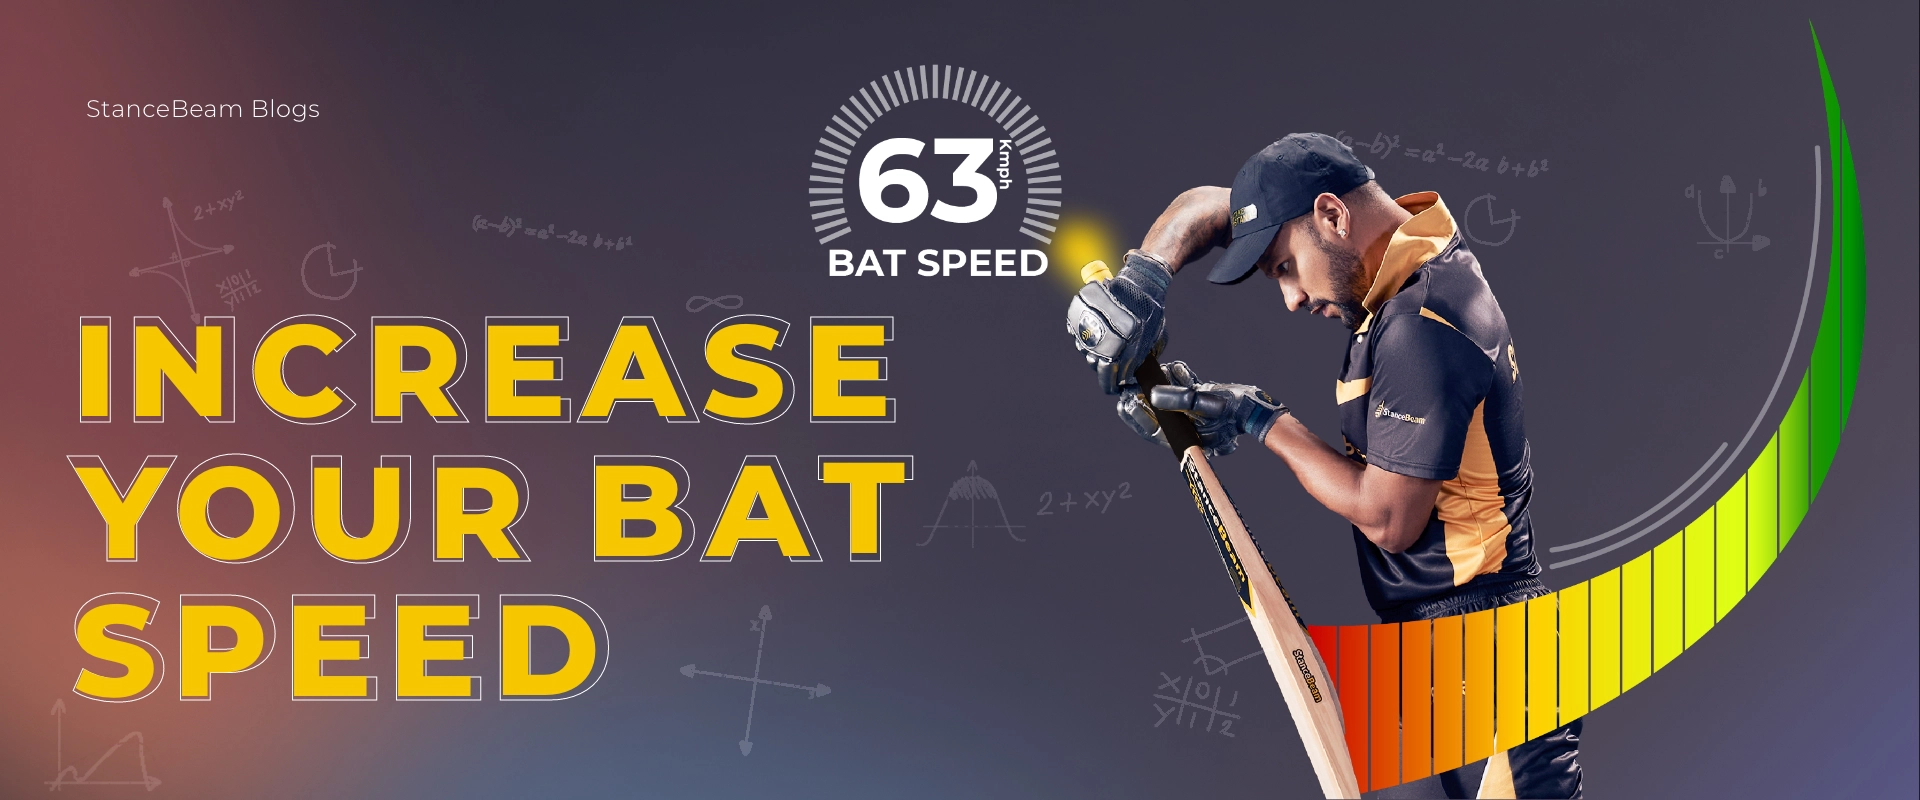 Increase Your Bat Speed with StanceBeam Striker Smart Cricket Bat Sensor